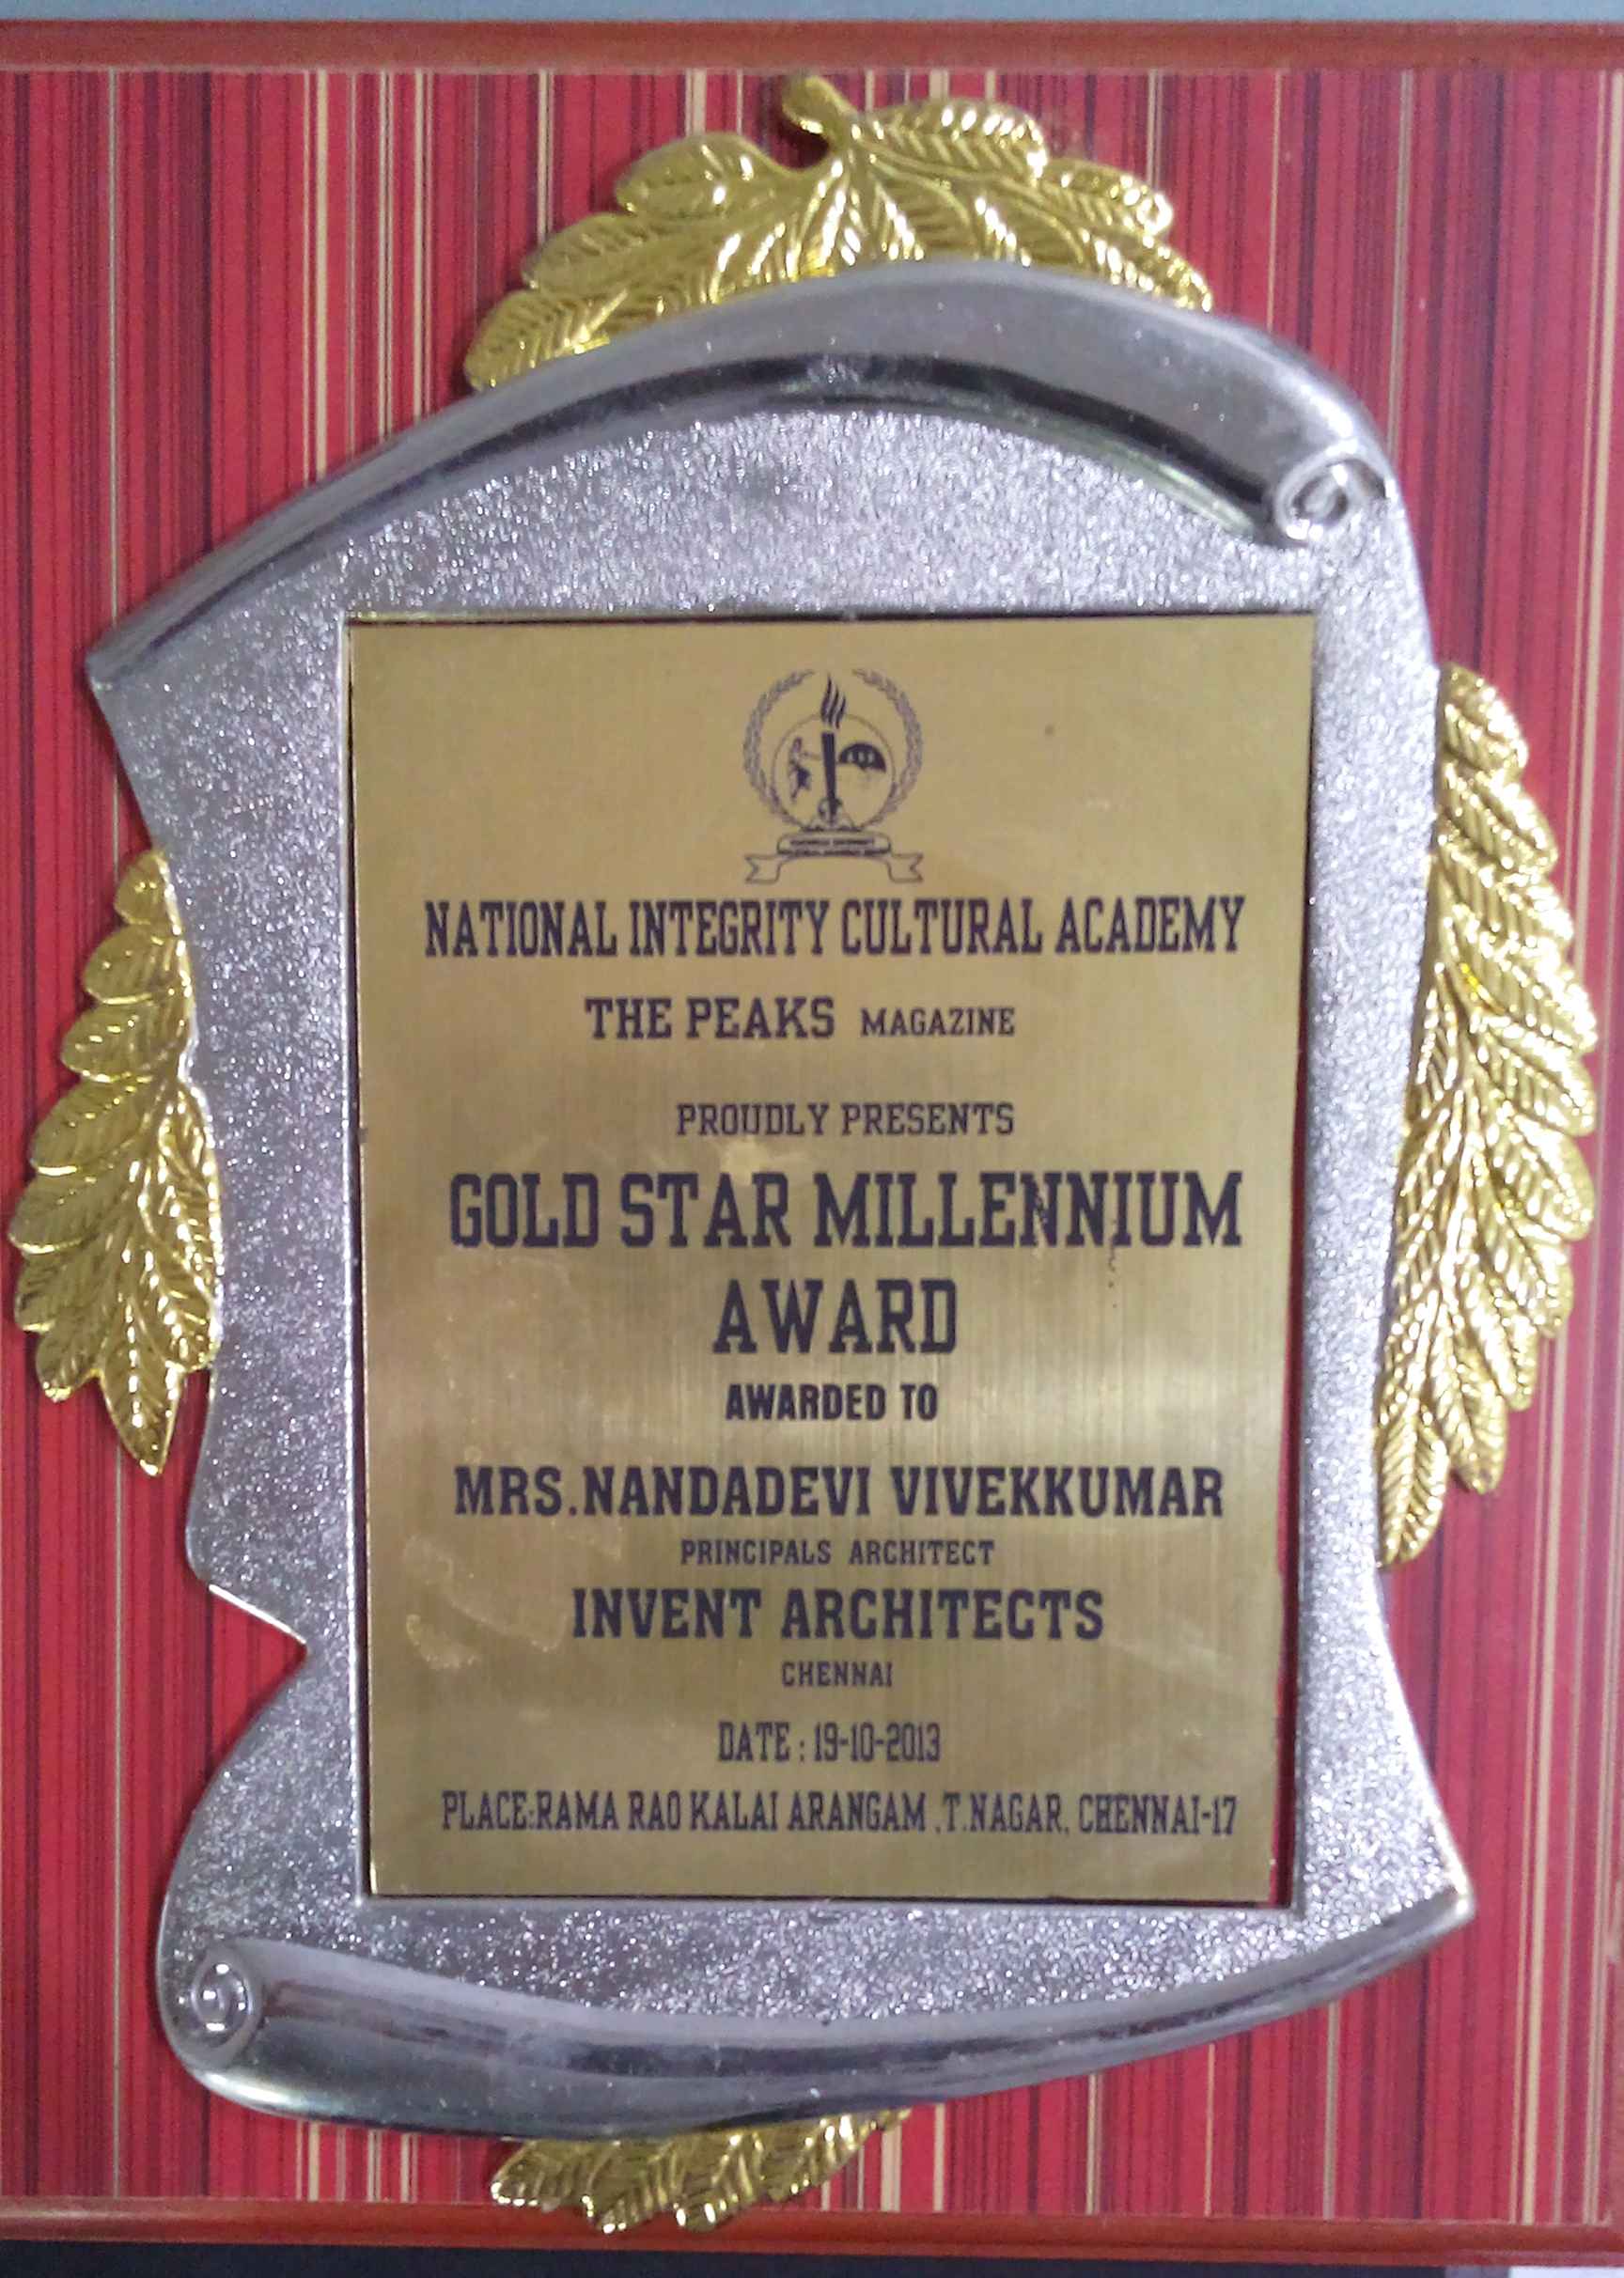 Gold star millennium award in adyar Chennai